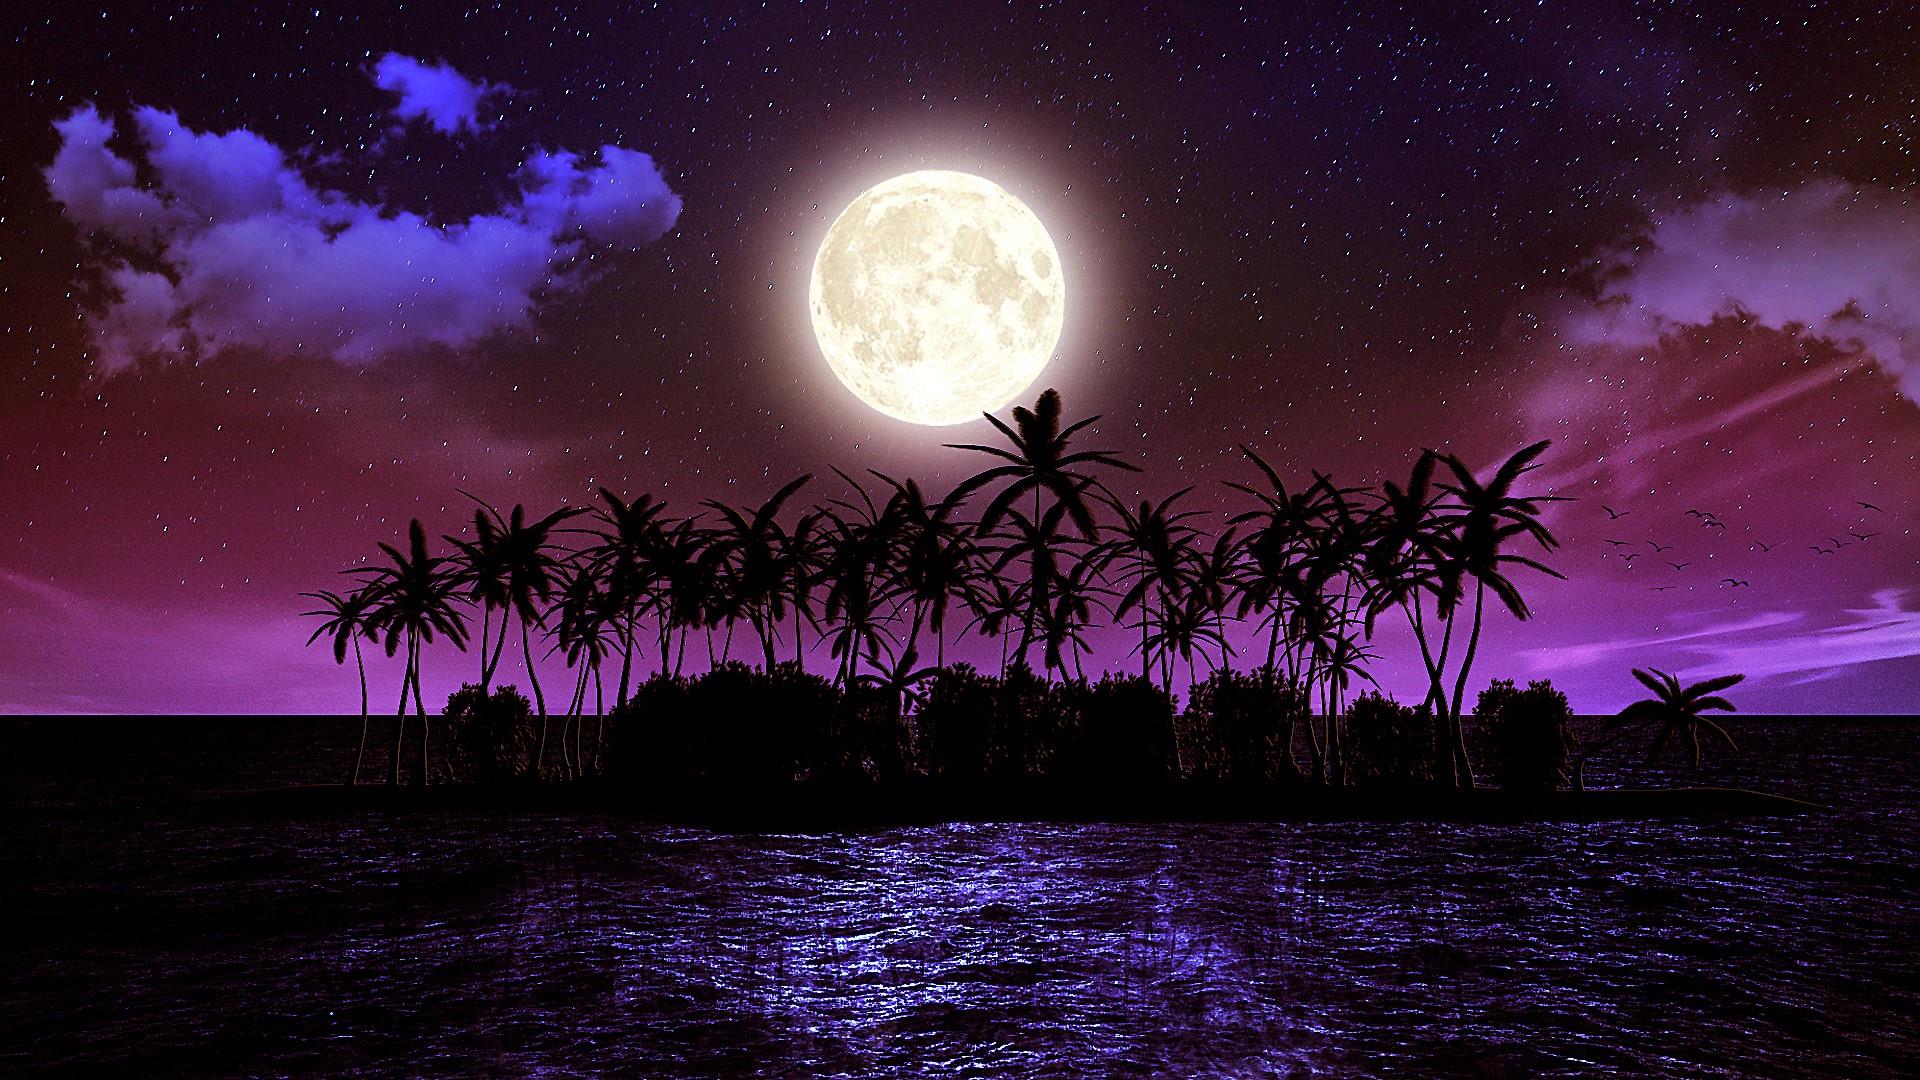 Full Moon on Tropical Night